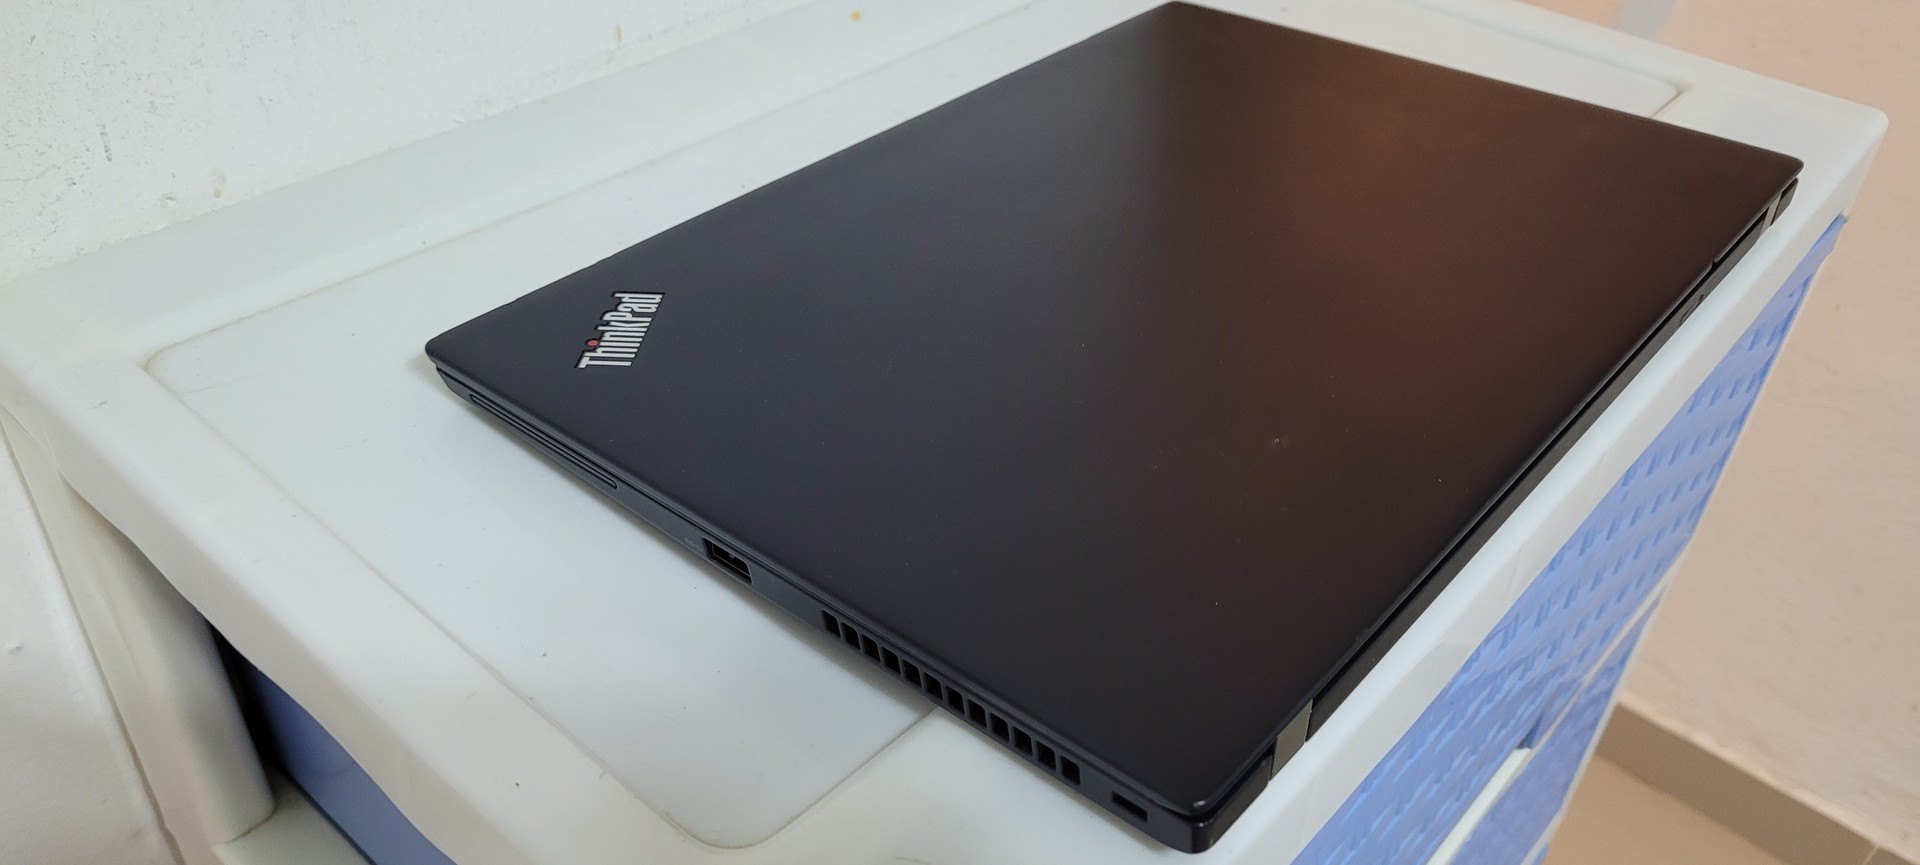 computadoras y laptops - laptop Lenovo t460 14 Pulg Core i5 6ta Gen Ram 8gb ddr4 Disco 256gb SSD hdmi  2